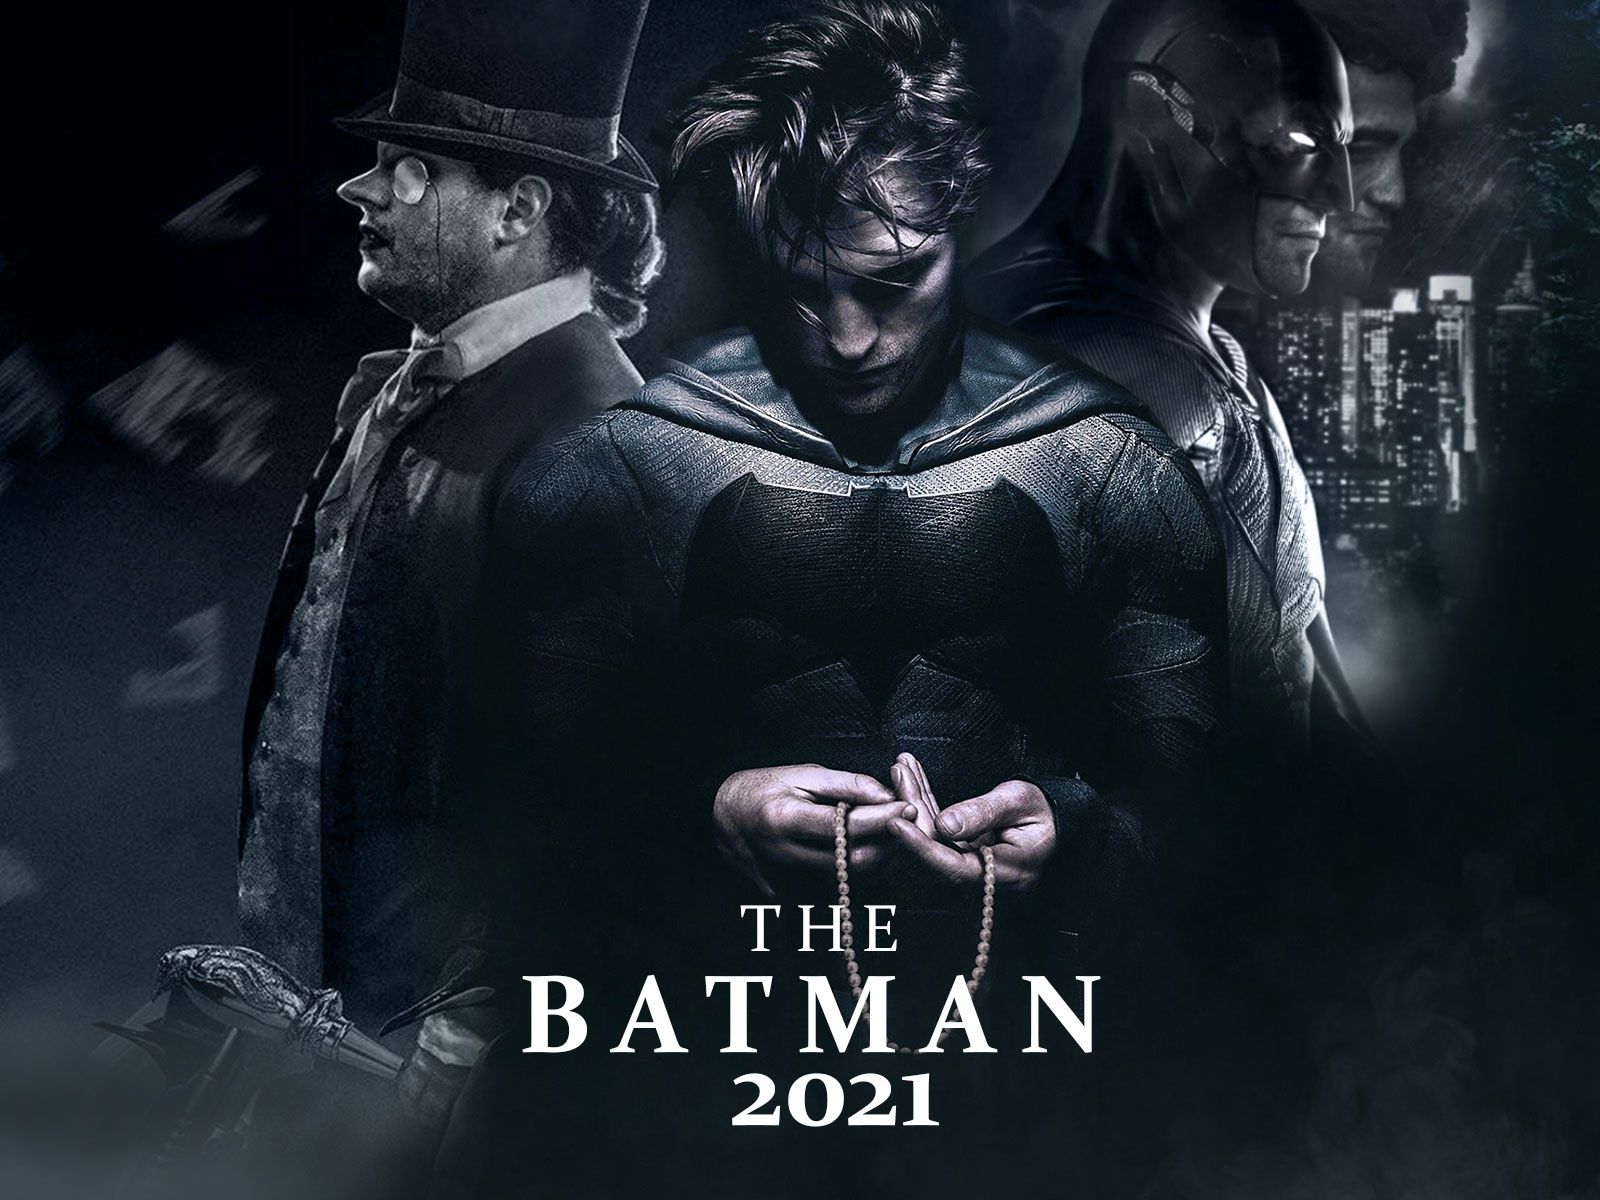 The Batman 2021 Movie Poster Edit